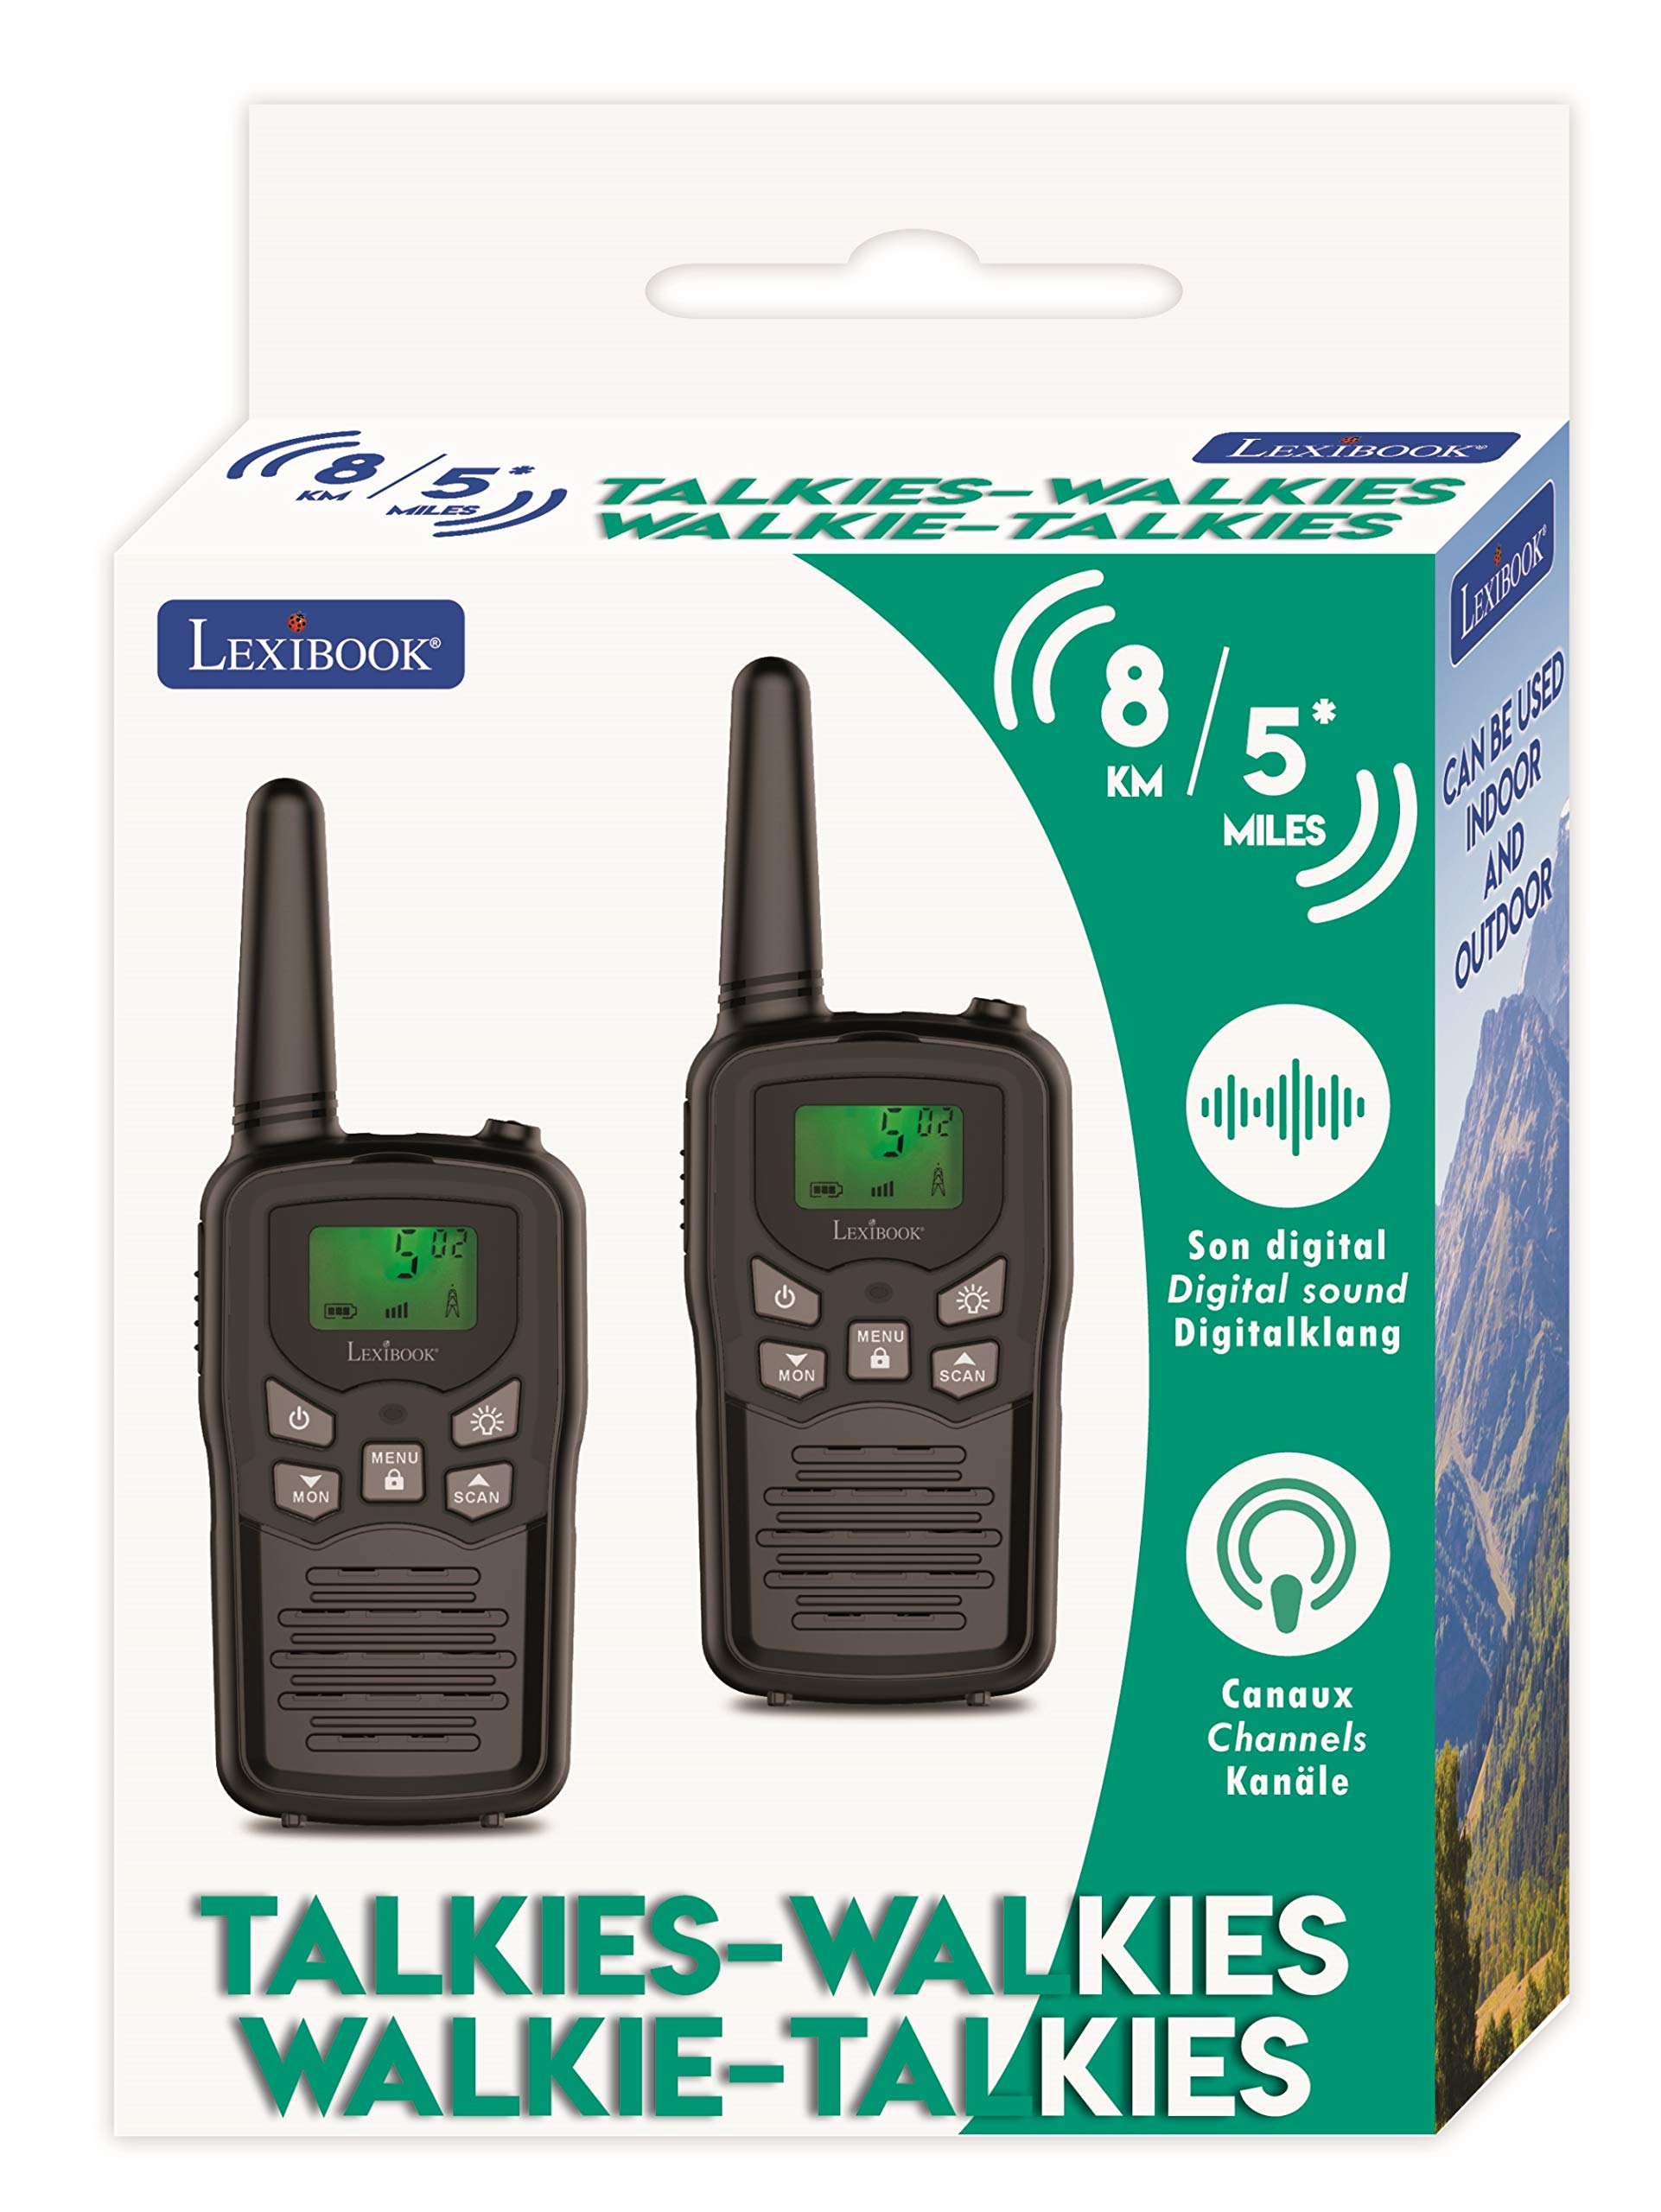 LEXiBOOK Walkie-talkies for Kids, Toys Long Range 8km / 5 Miles, LCD Screen, Digital Sound, Indoor and Outdoor Communication Game, Belt Clip, Black, TW58US